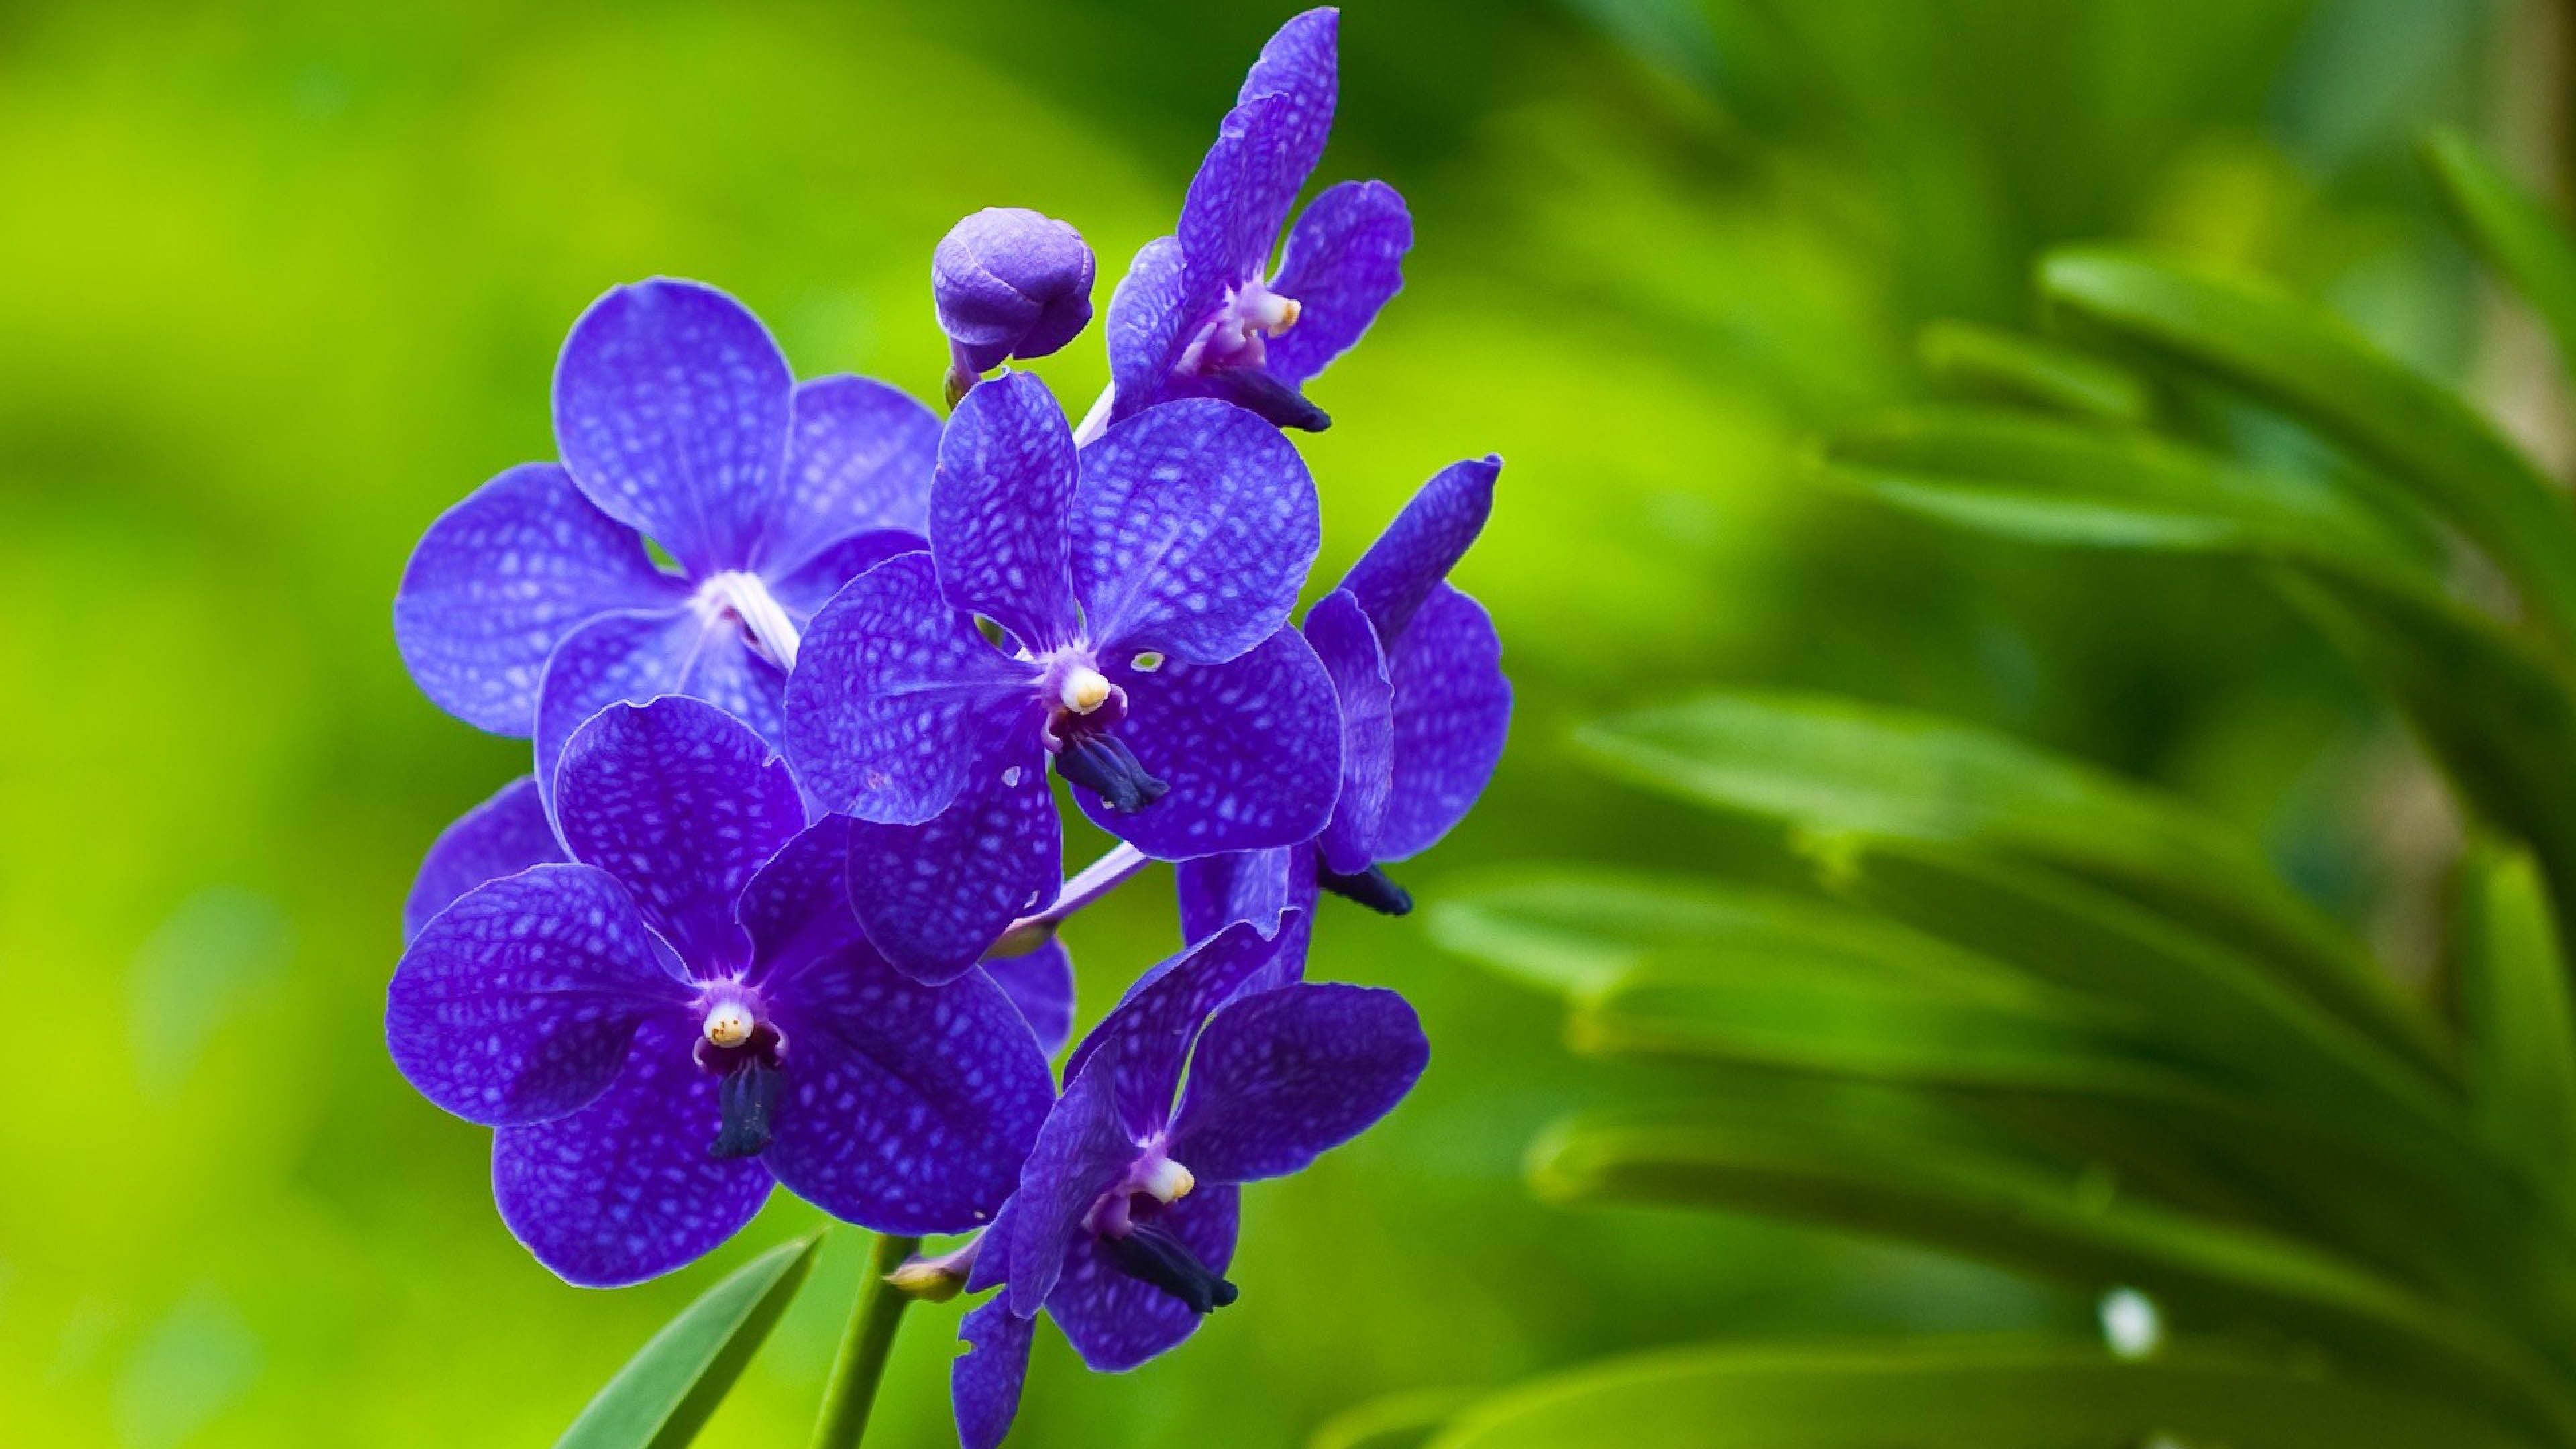 Amazing Close Up On Purple Flower 16 9 Ultra HD. Orchid Wallpaper, Flower Iphone Wallpaper, Purple Flowers Wallpaper